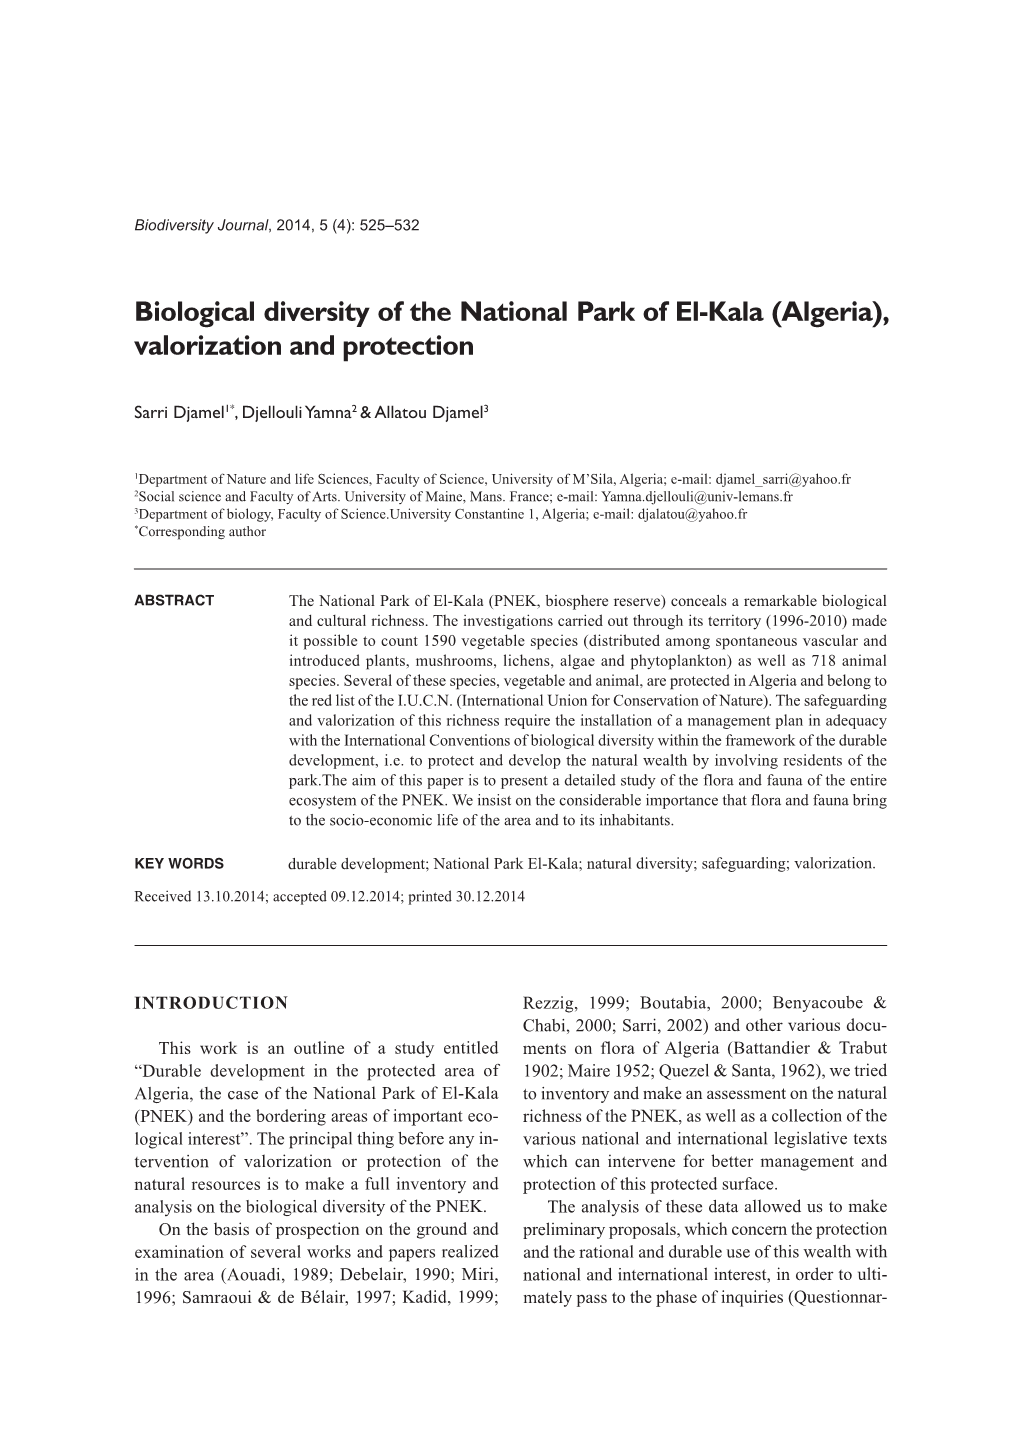 Biological Diversity of the National Park of El-Kala (Algeria), Valorization and Protection